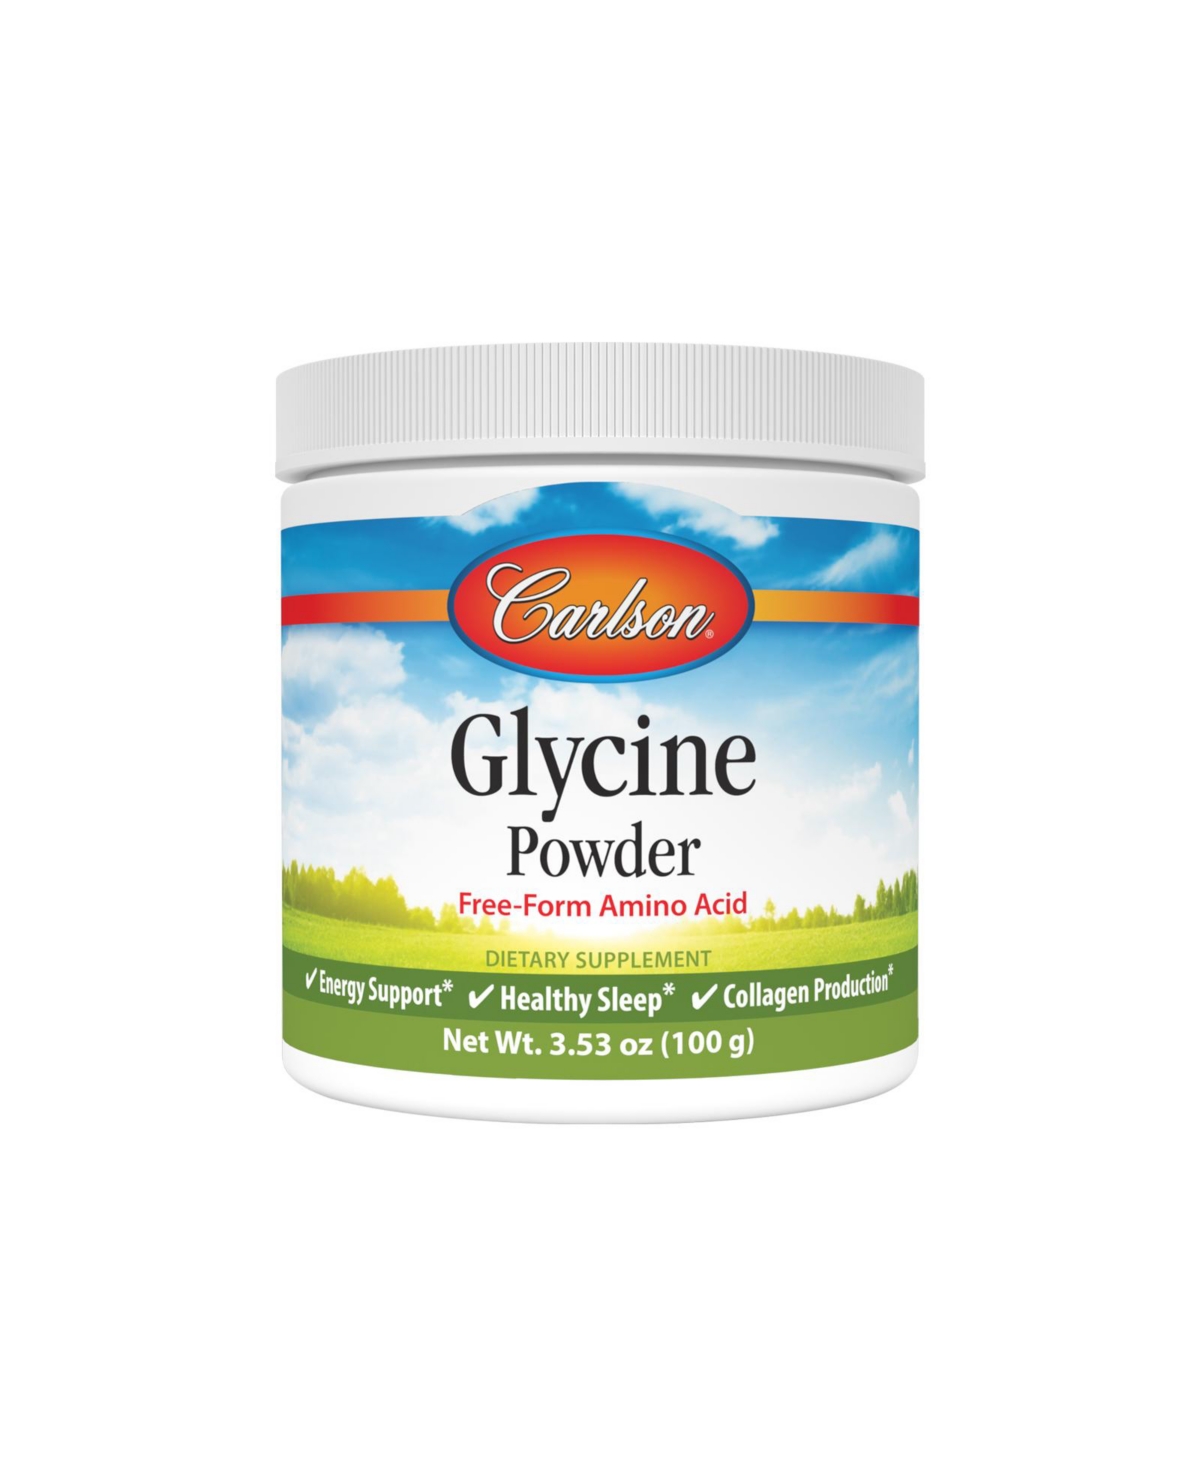 Carlson - Glycine Powder, 2000 mg Glycine, Amino Acid Powder, Muscle Development, 3.53 oz (100 g) - Assorted Pre-Pack